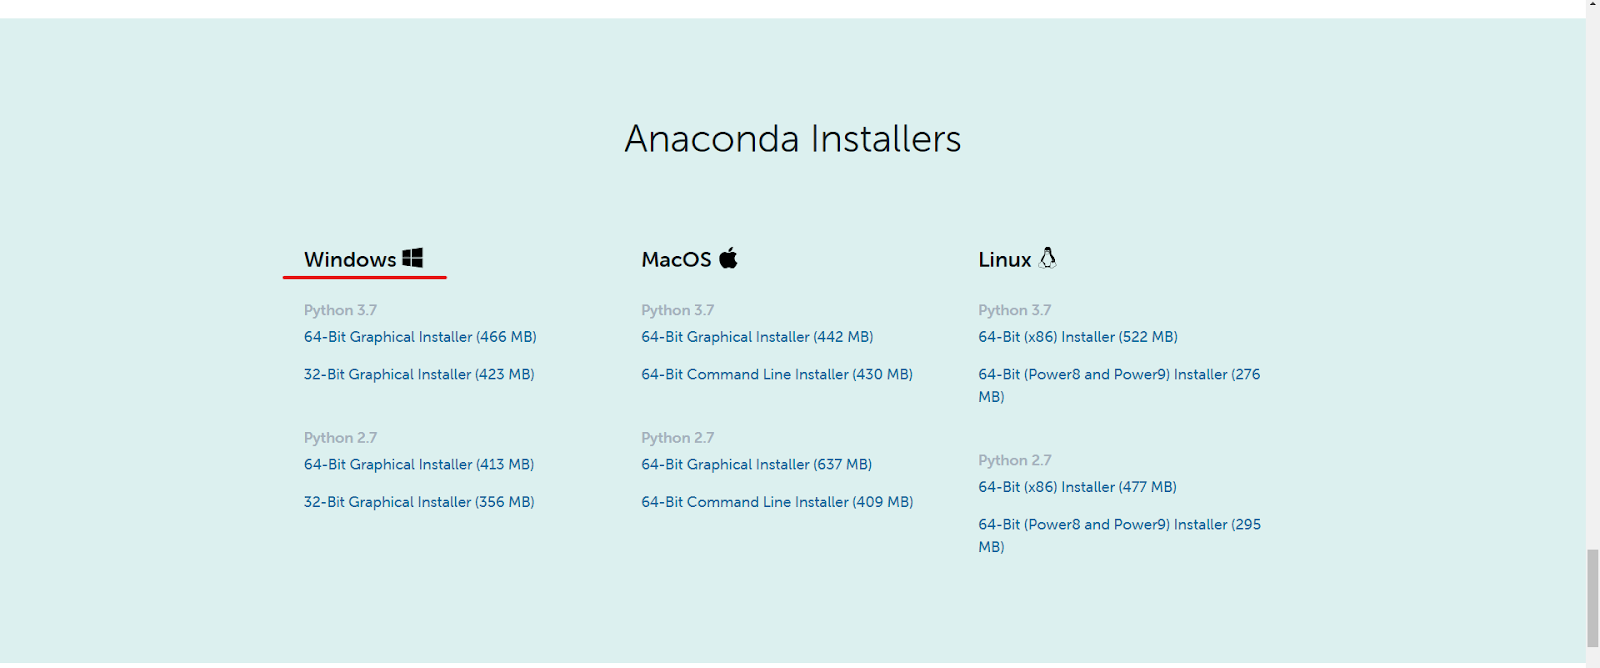 The Anaconda installer